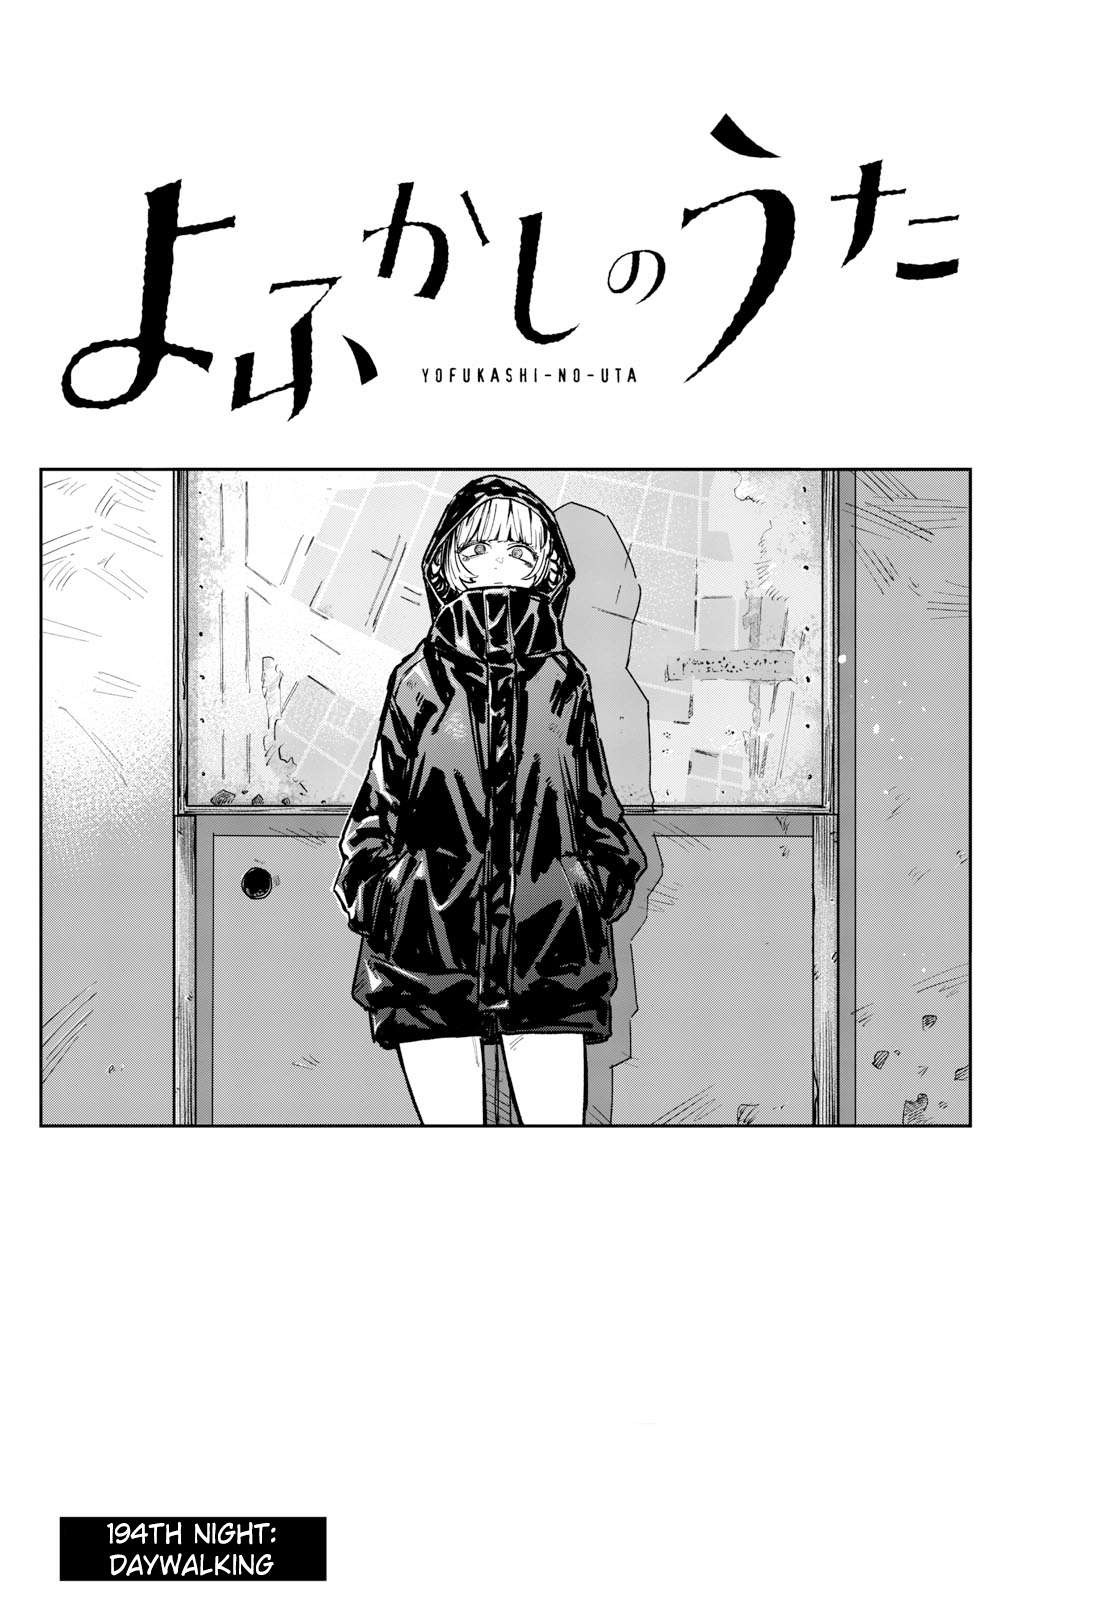 Yofukashi no Uta (Official) - Chapter 189 - Read Free Manga Online